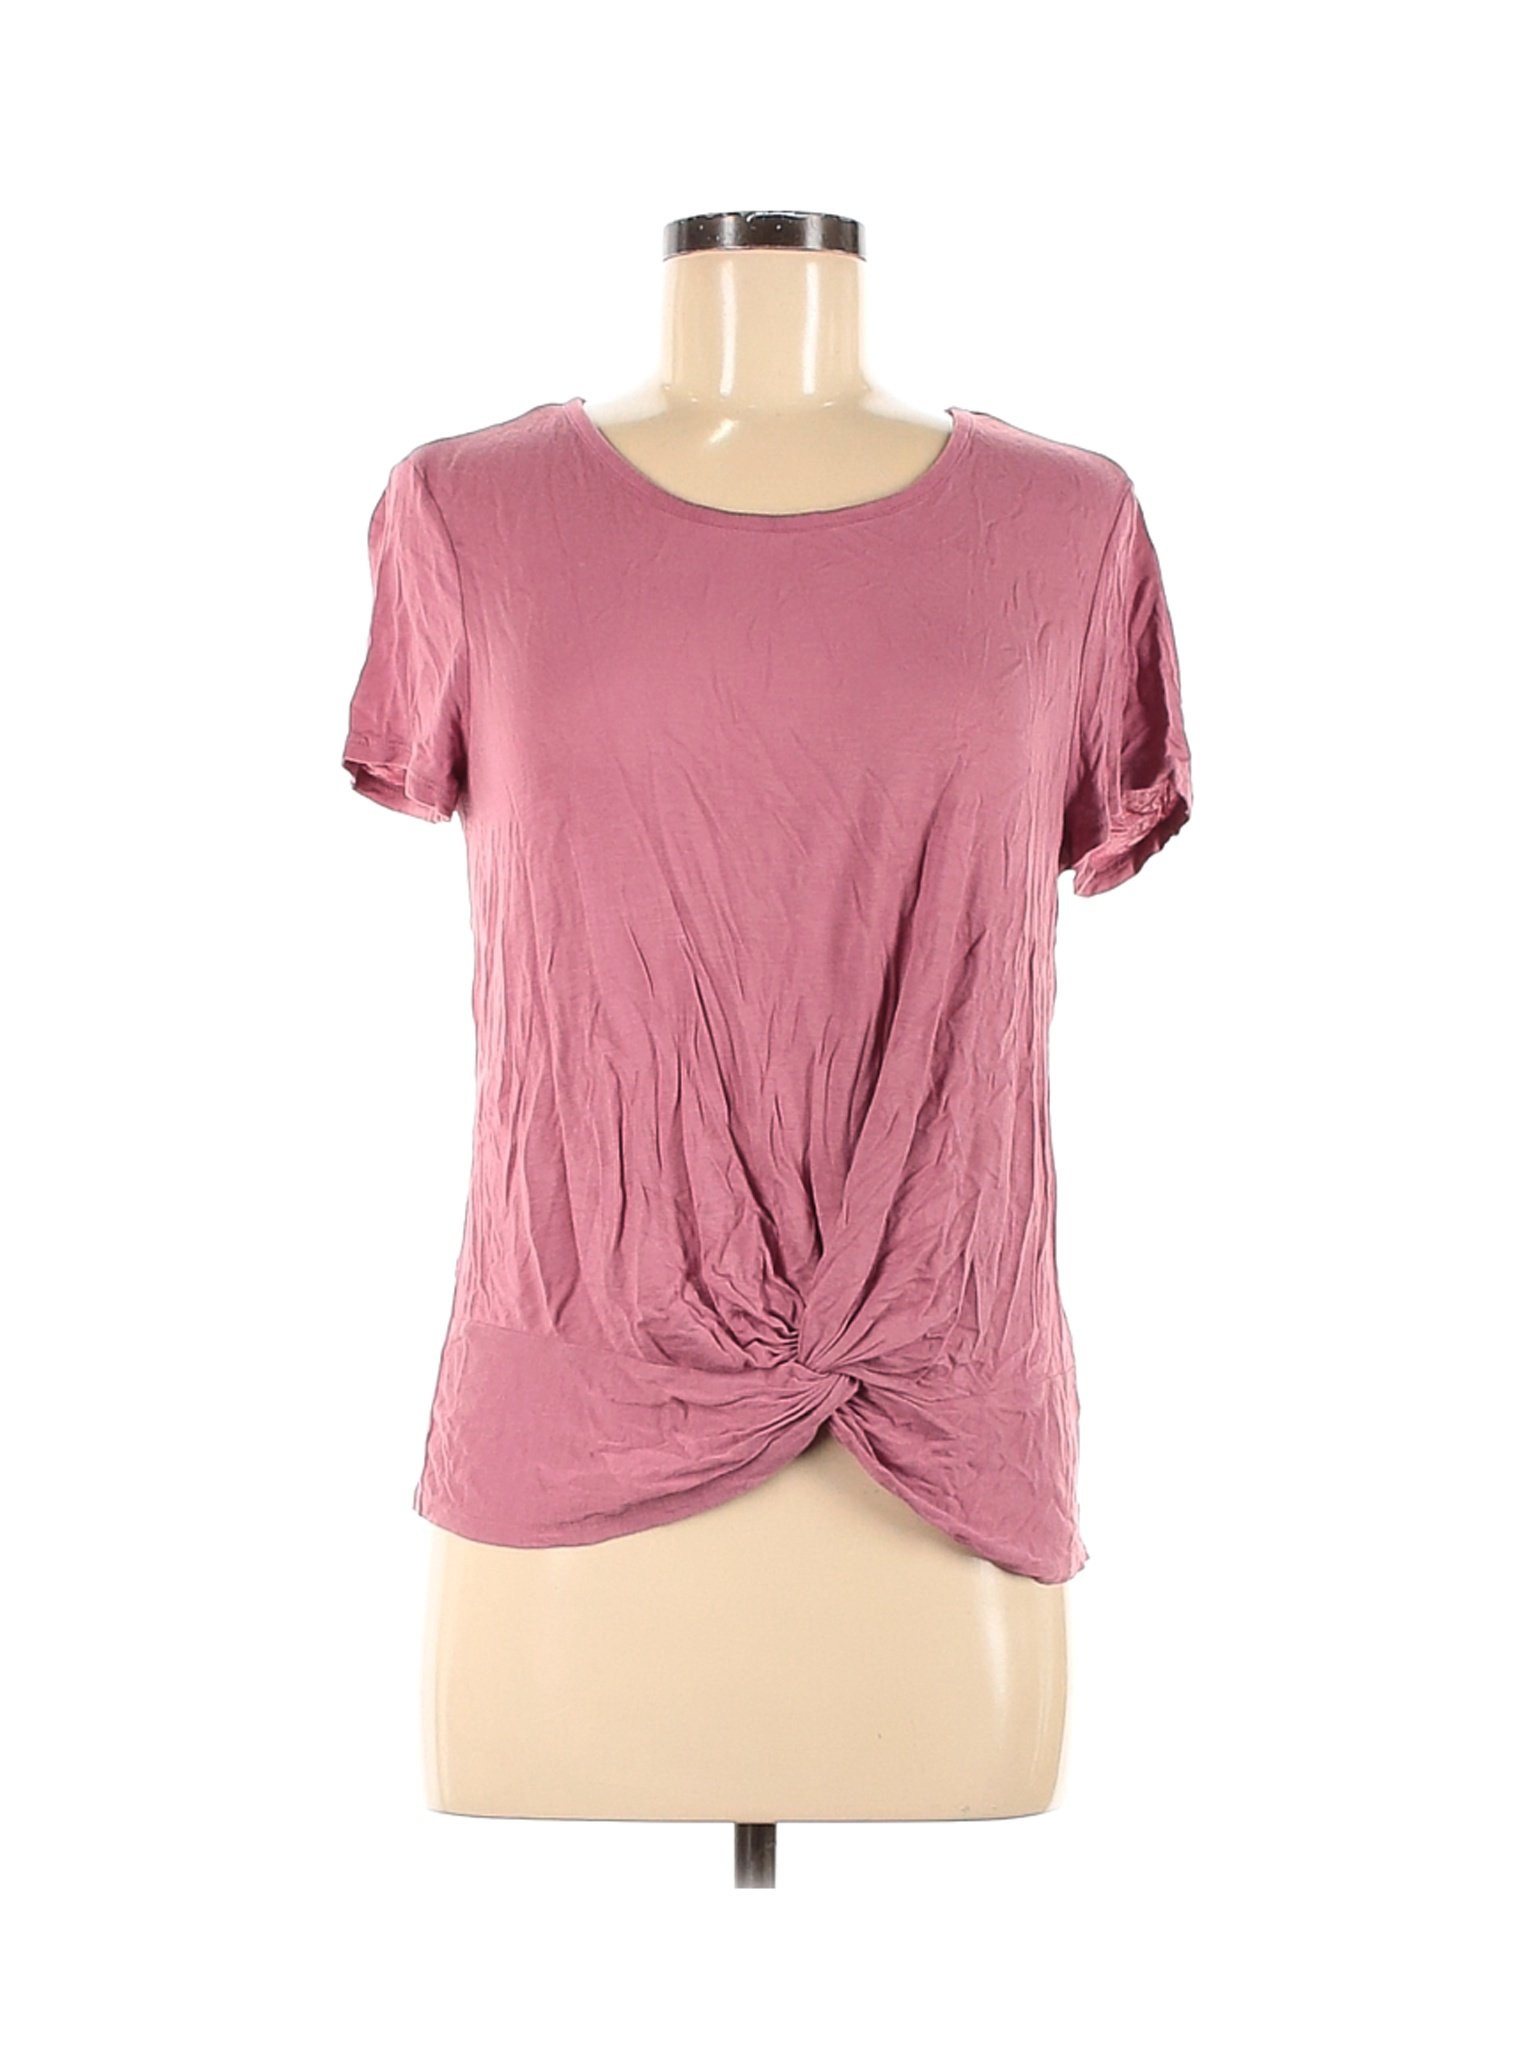 Pink Rose Women Pink Short Sleeve Top M | eBay